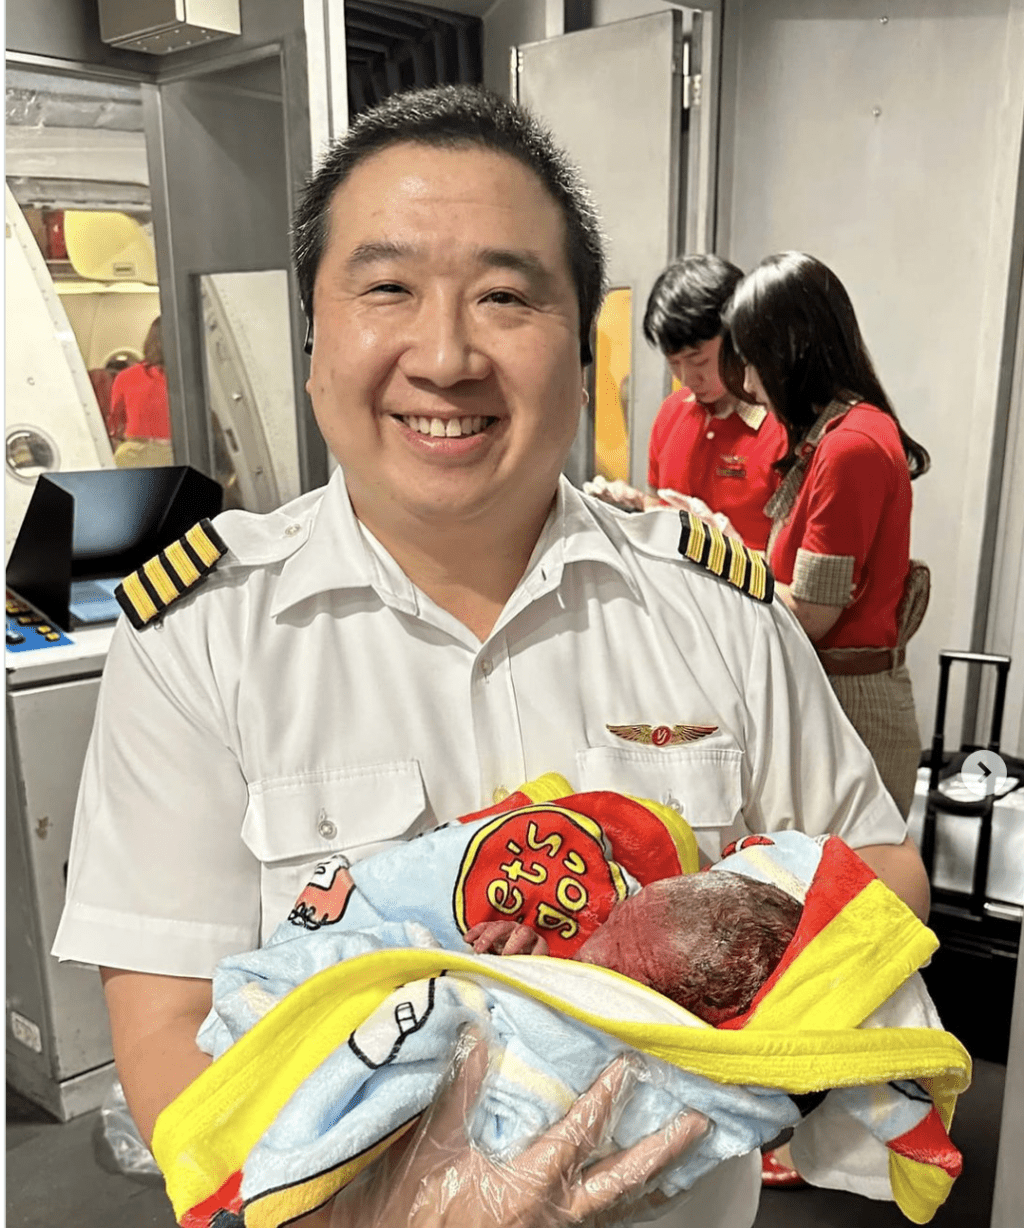 Sararnrakskul在 Instagram 上发文公布一张抱着BBh旳照片，写道：「我当飞行员已经 18 年了。我刚刚在飞机上帮助了一名新生婴儿！」